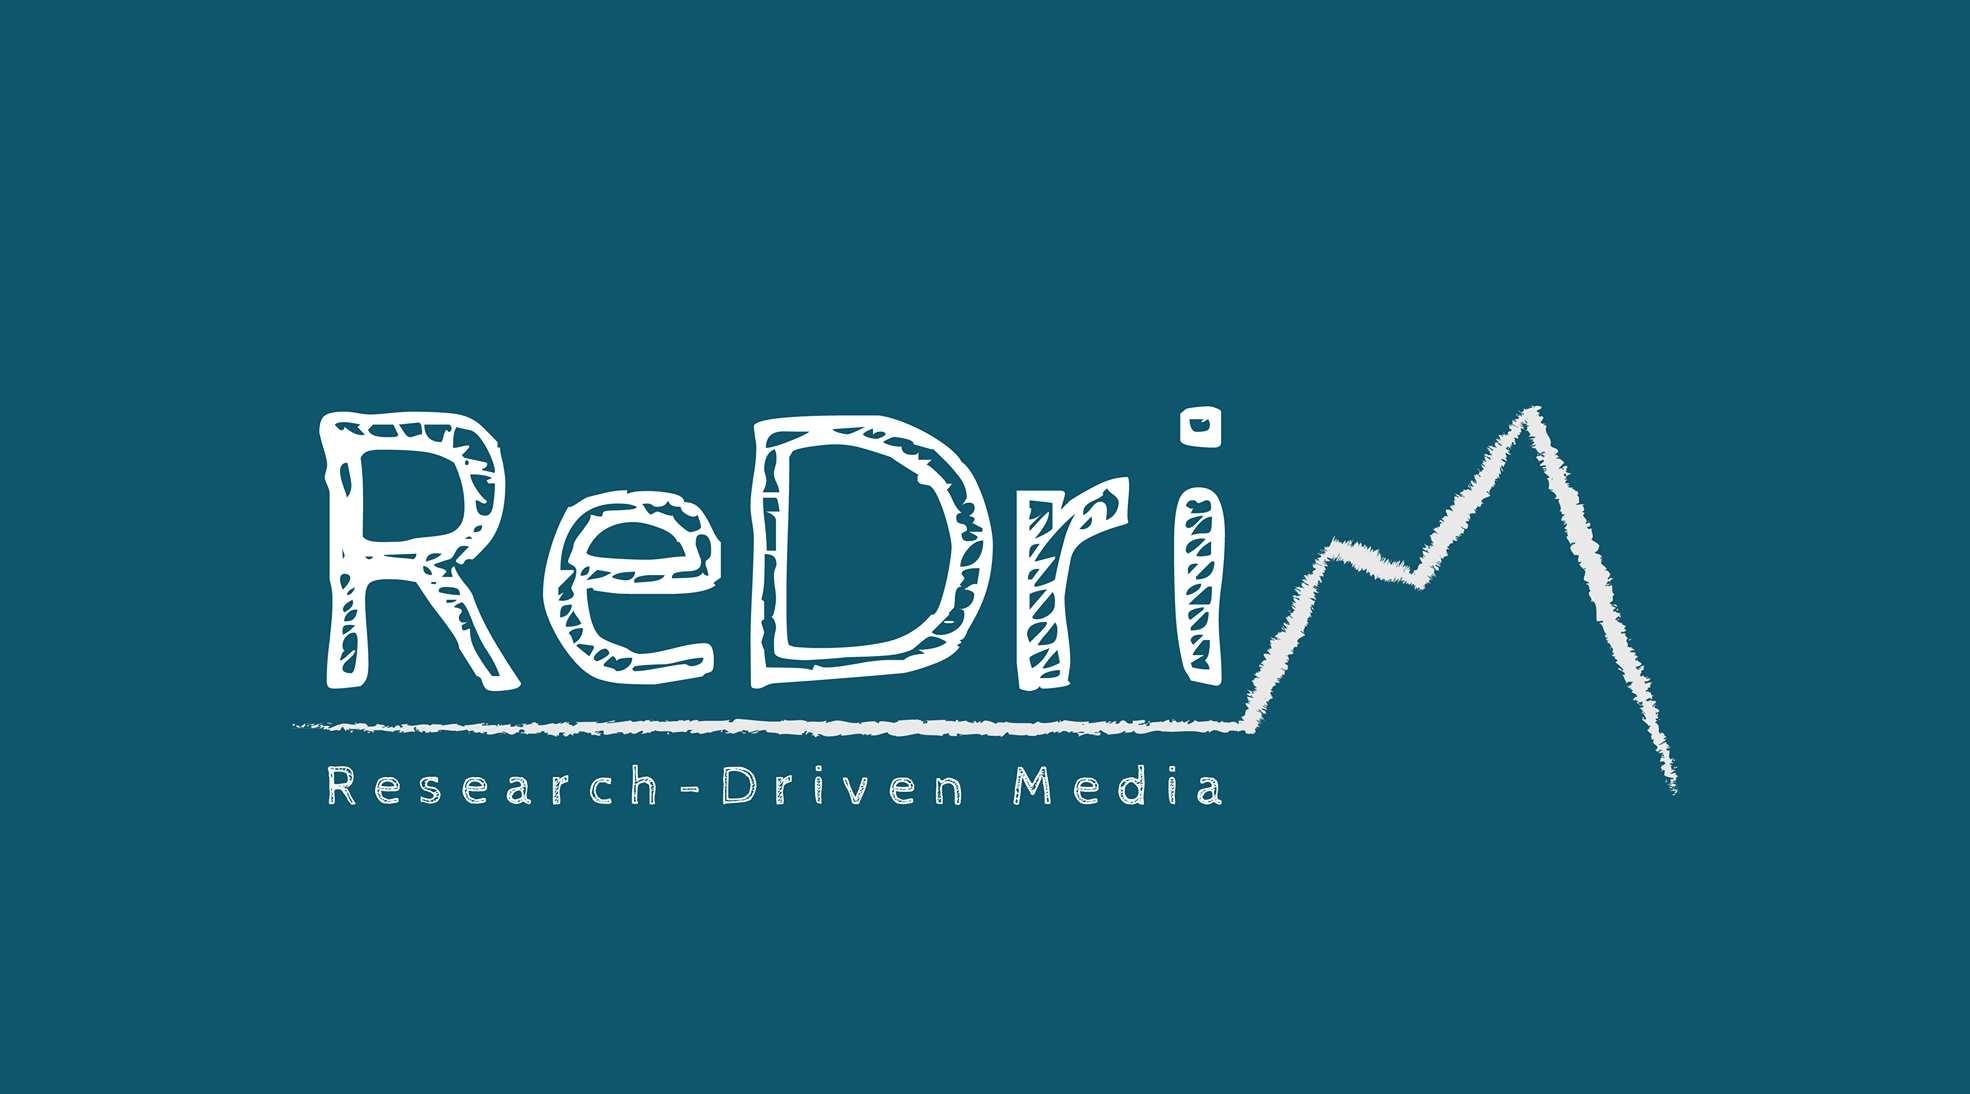 Research-Driven Media in New Armenia (ReDriM)